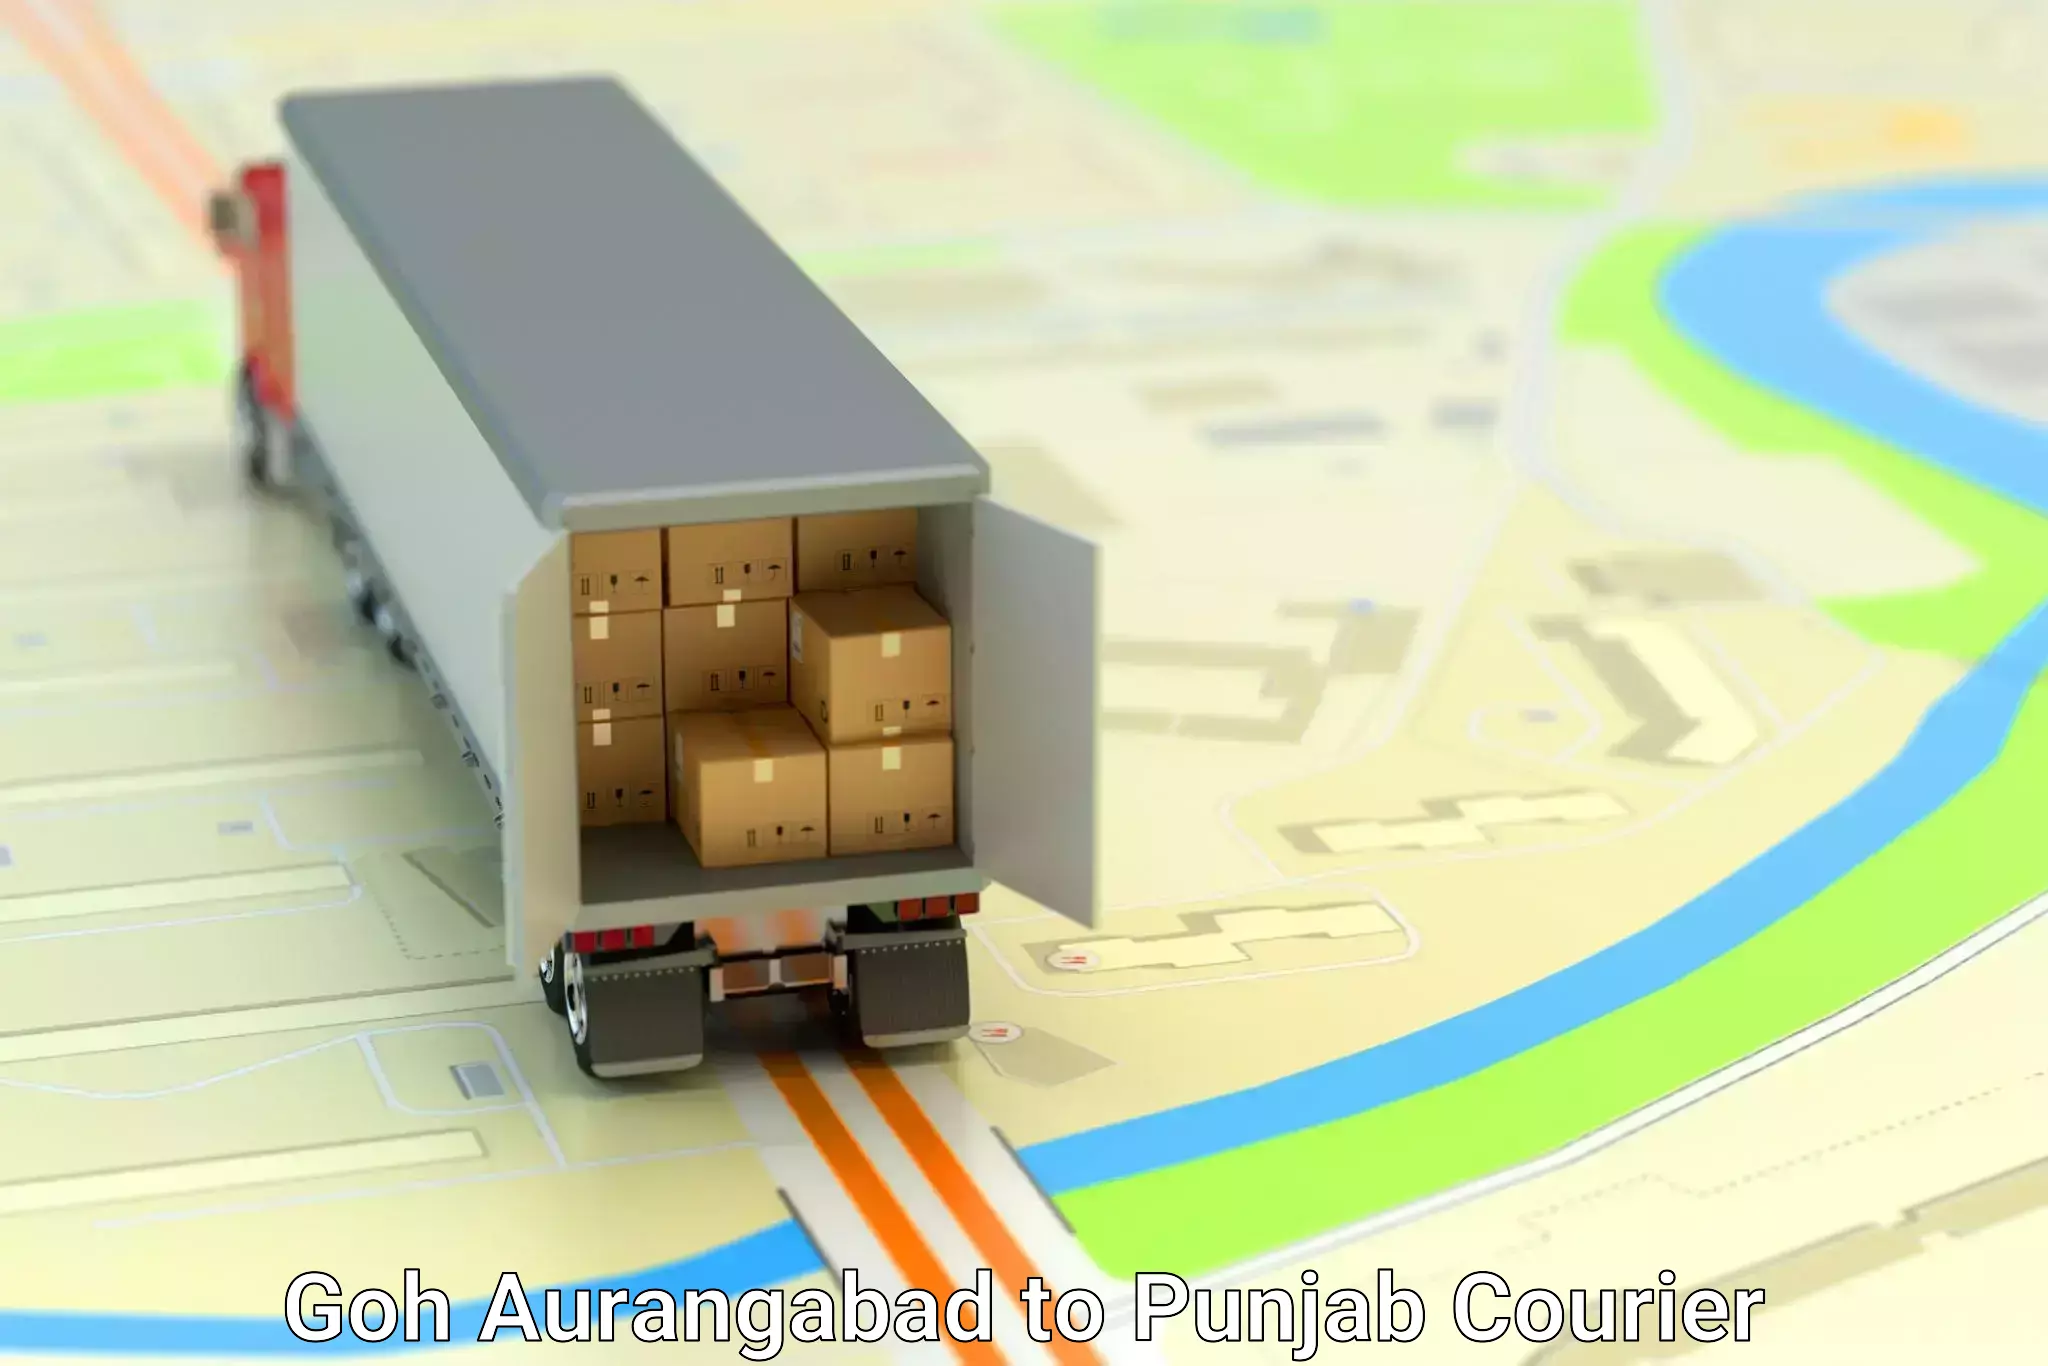 Professional furniture movers in Goh Aurangabad to Punjab